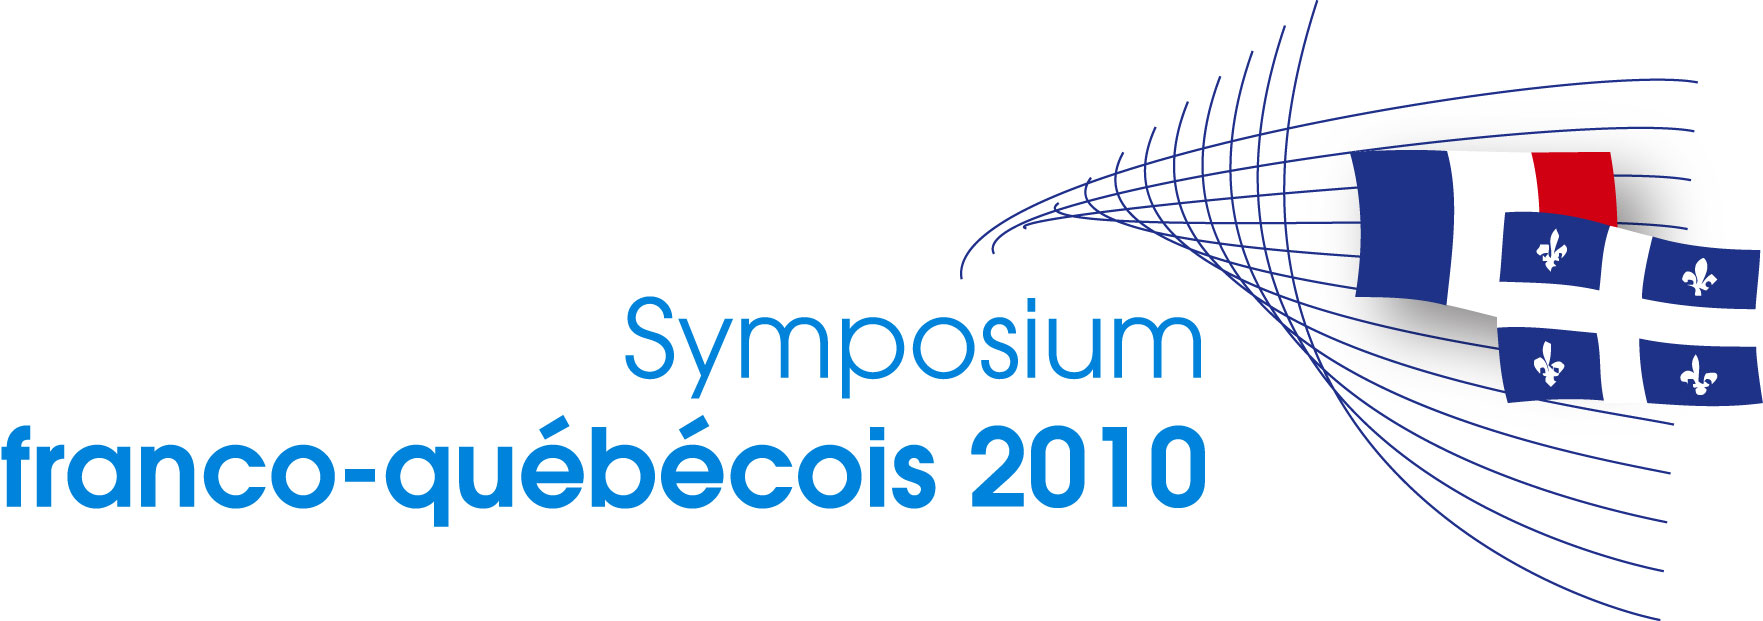 Symposium franco-quebecois 2010